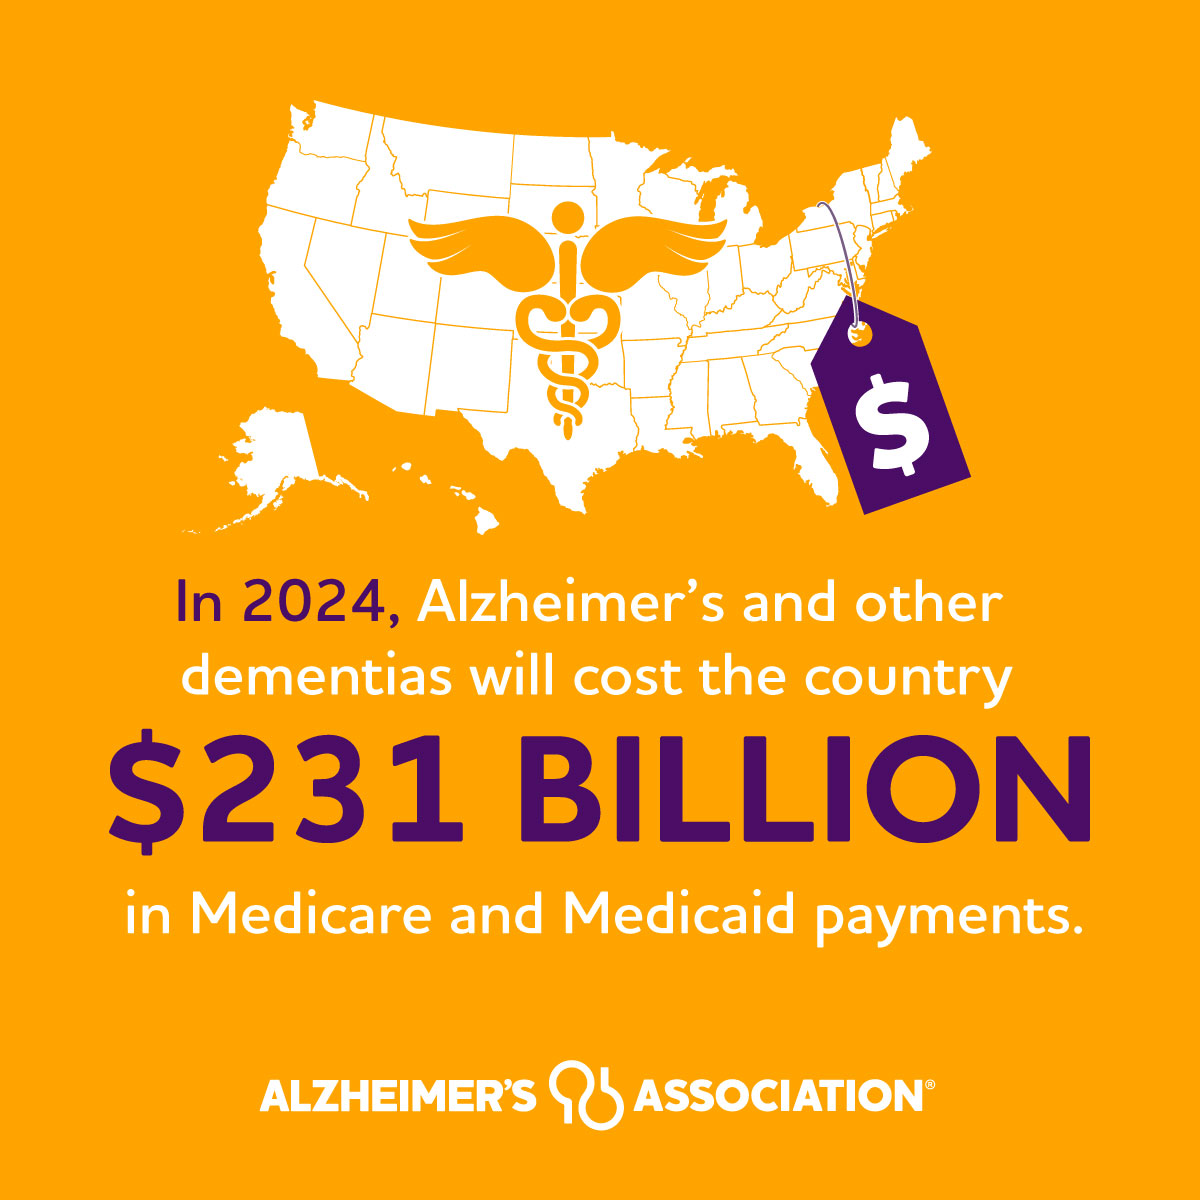 FACT: Alzheimer's is devastating Medicare and Medicaid. Share the facts: alz.org/facts. #AlzheimersInAmerica #ENDALZ